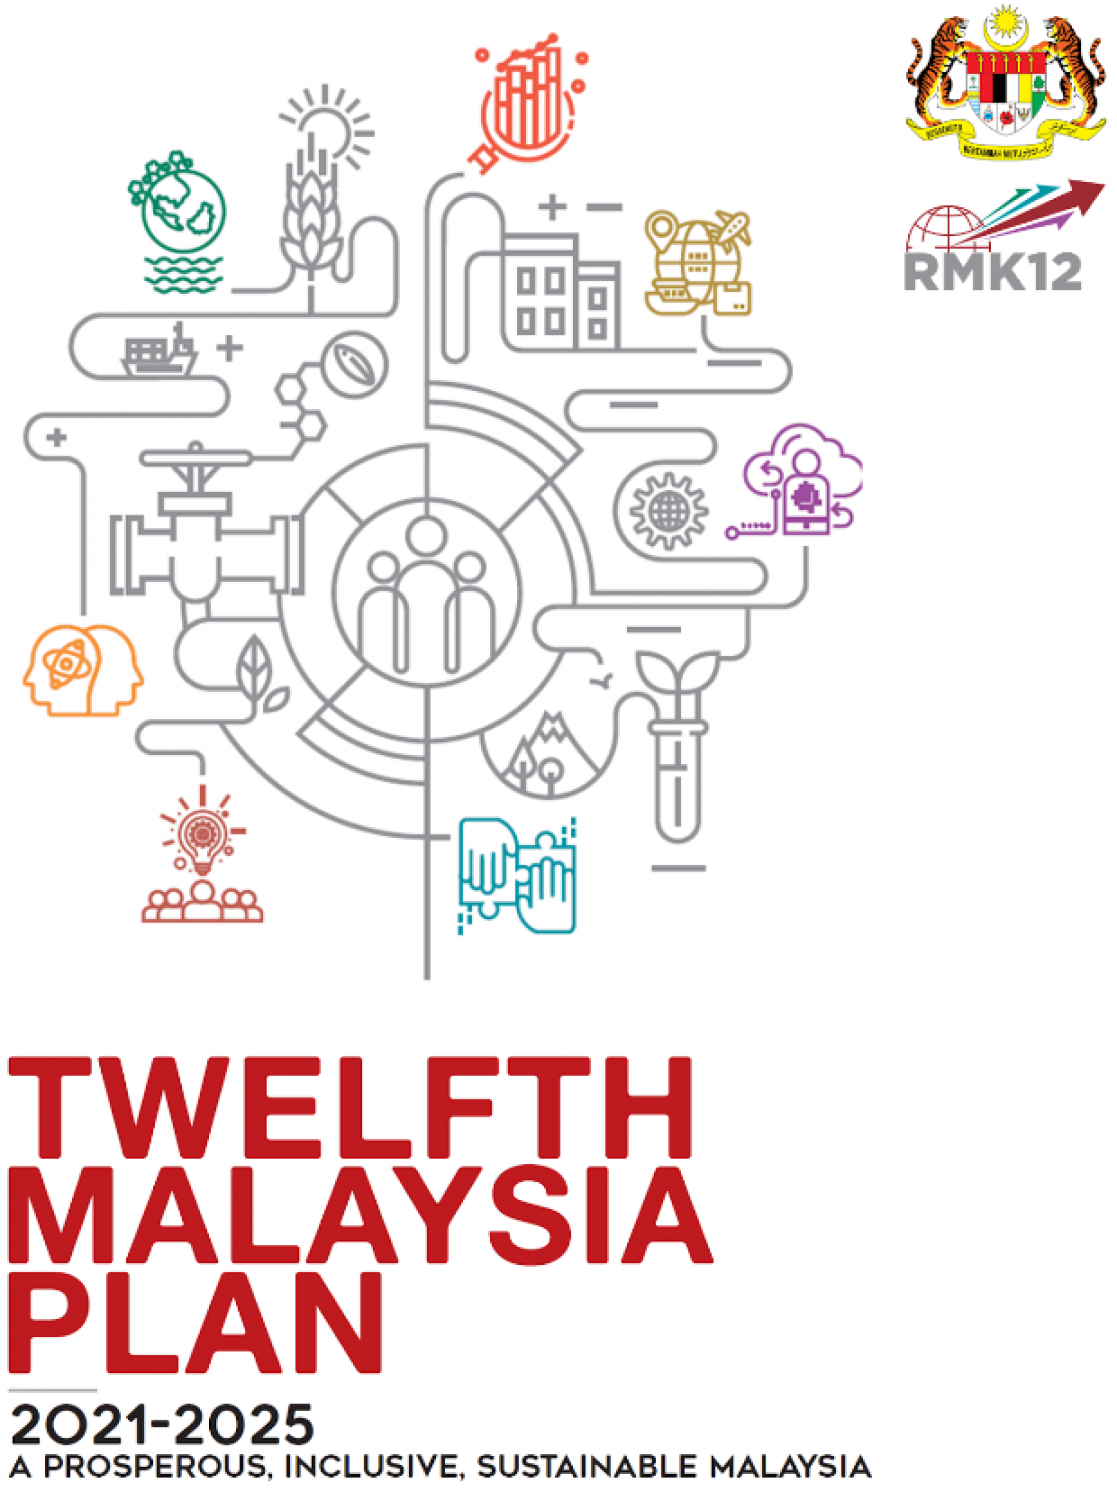 Twelfth Malaysia Plan 2021-2025 banner